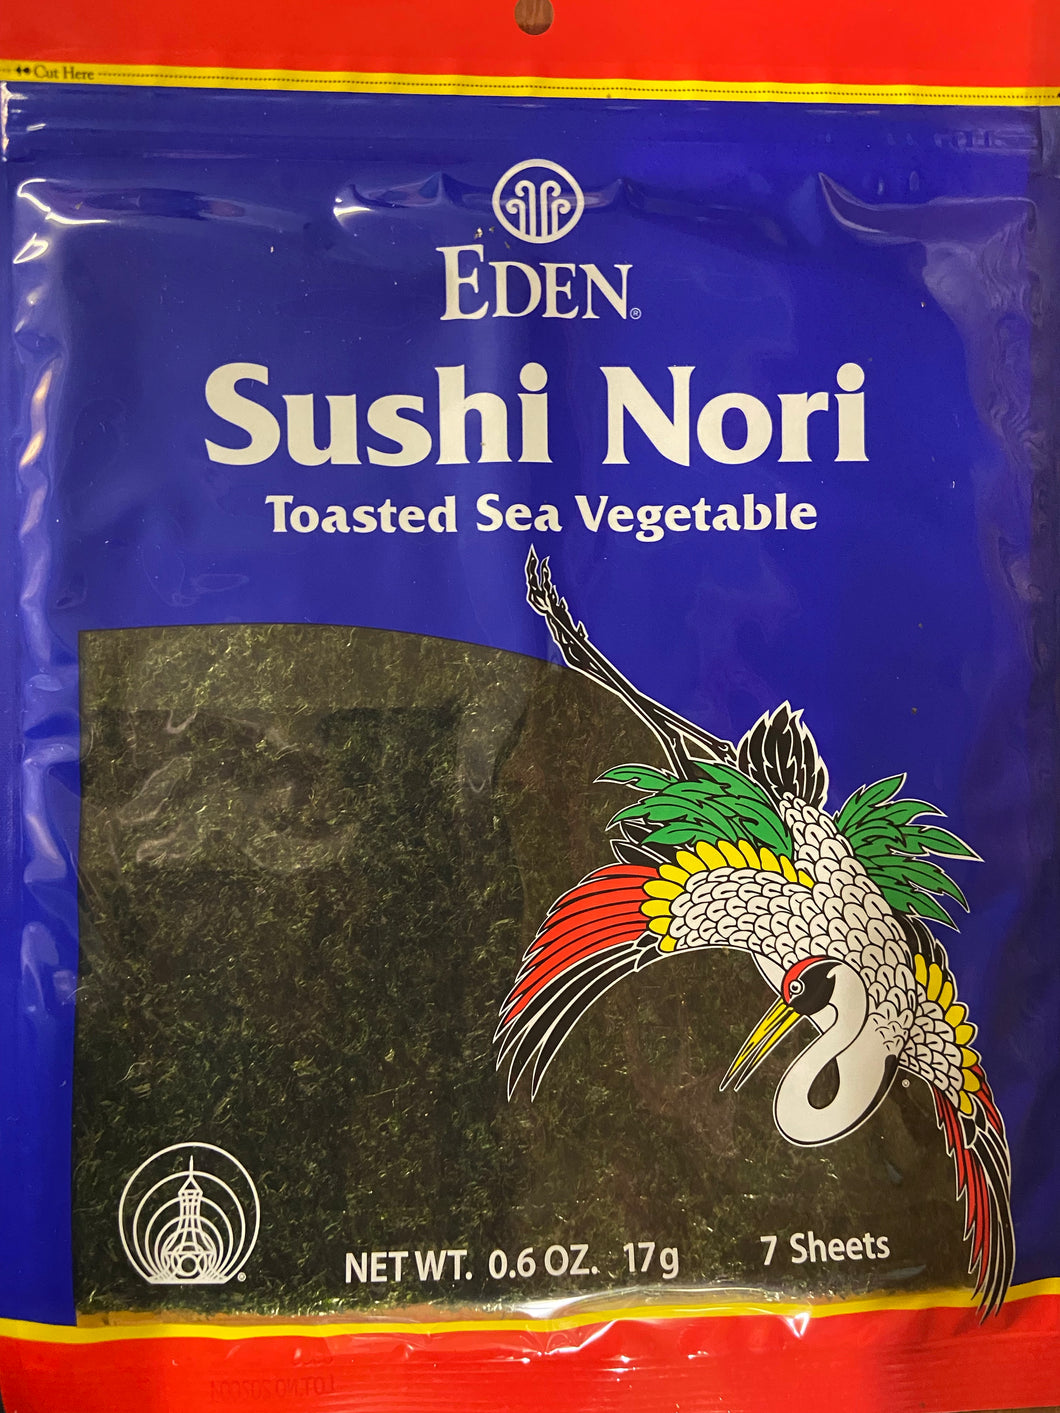 Sushi Nori, Eden Foods, Toasted Sea Vegetable